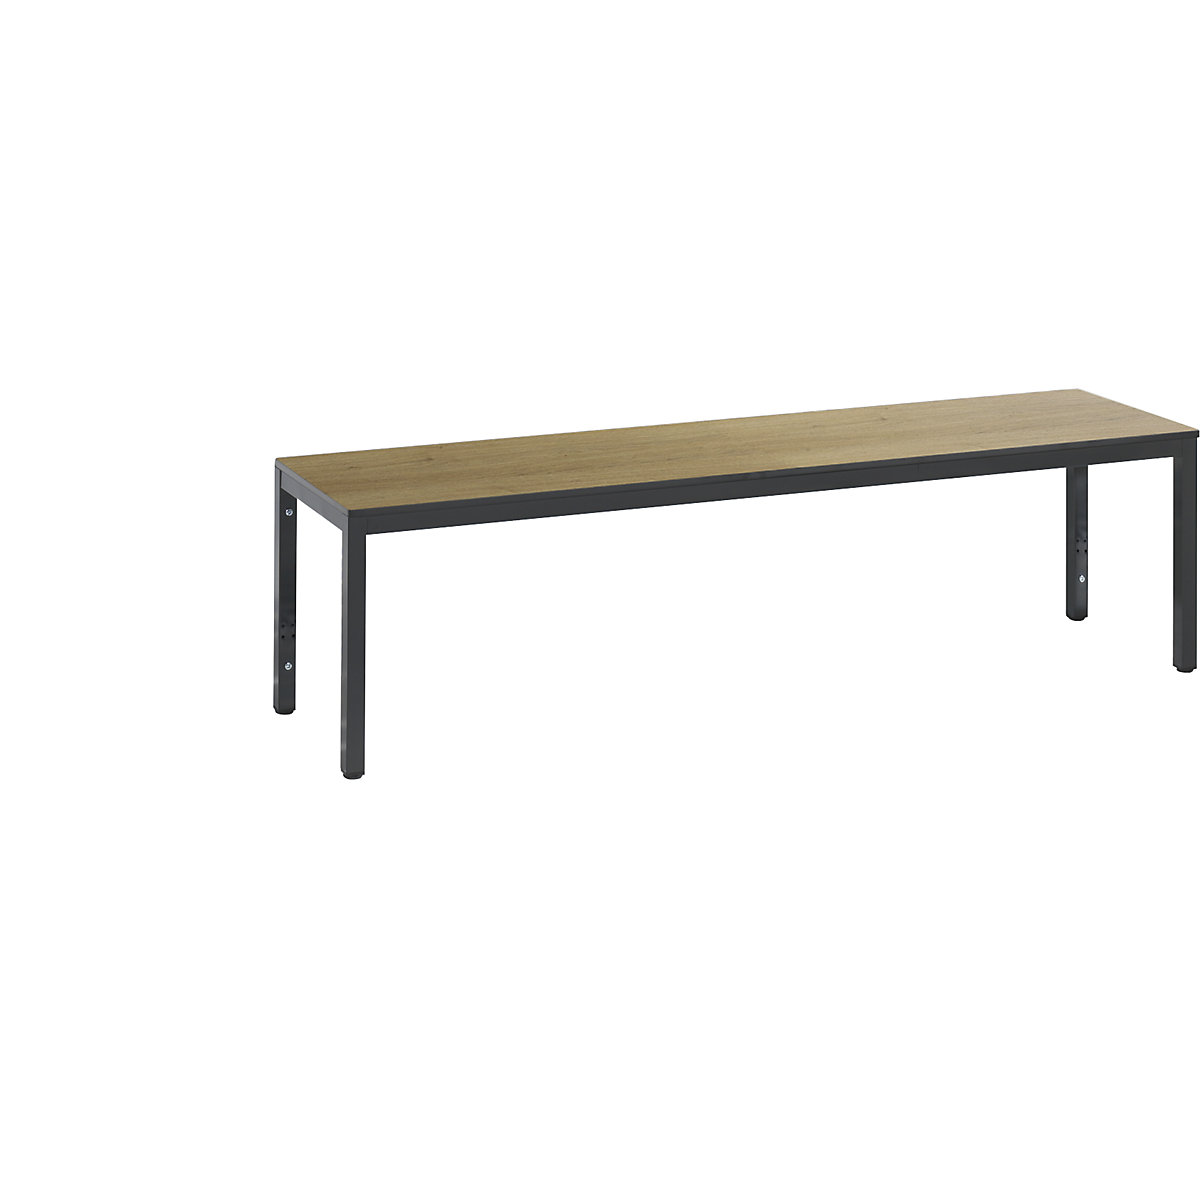 BASIC PLUS cloakroom bench – C+P, HPL seat surface, length 1500 mm, oak finish-7